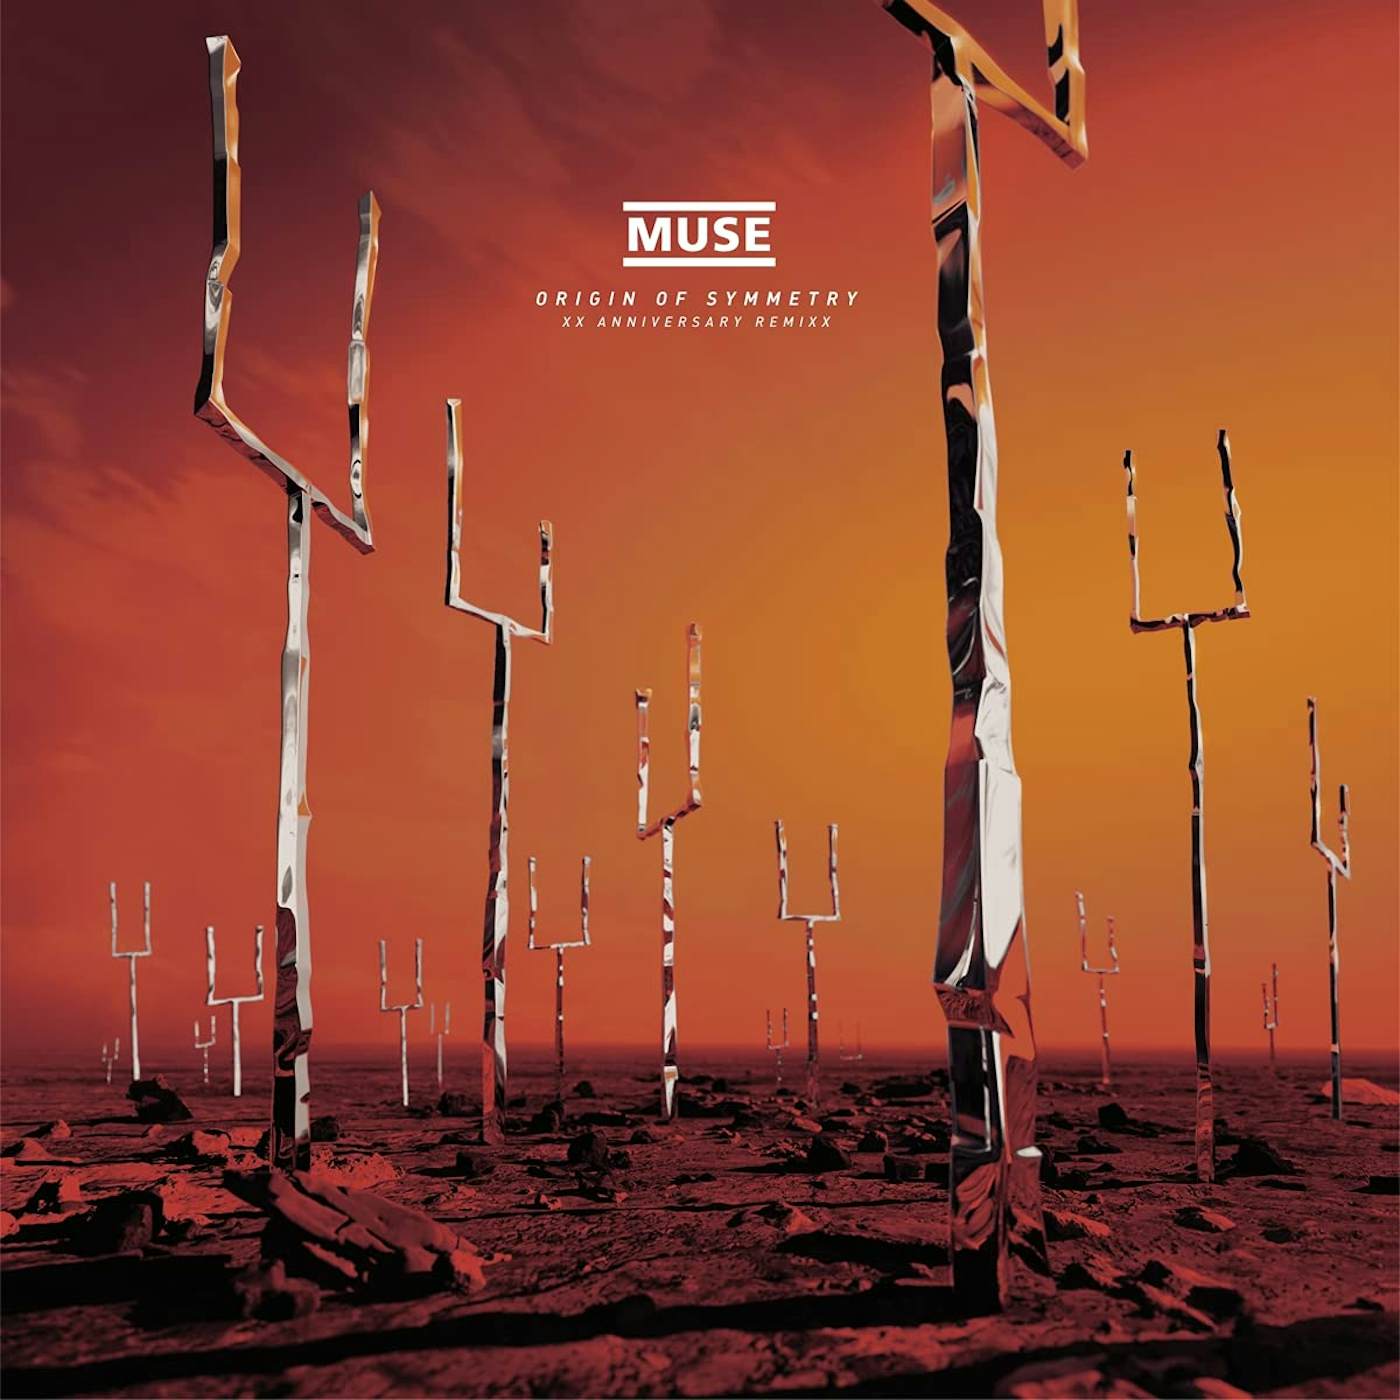 Muse ORIGIN OF SYMMETRY XX ANNIVERSARY REMIXX Vinyl Record